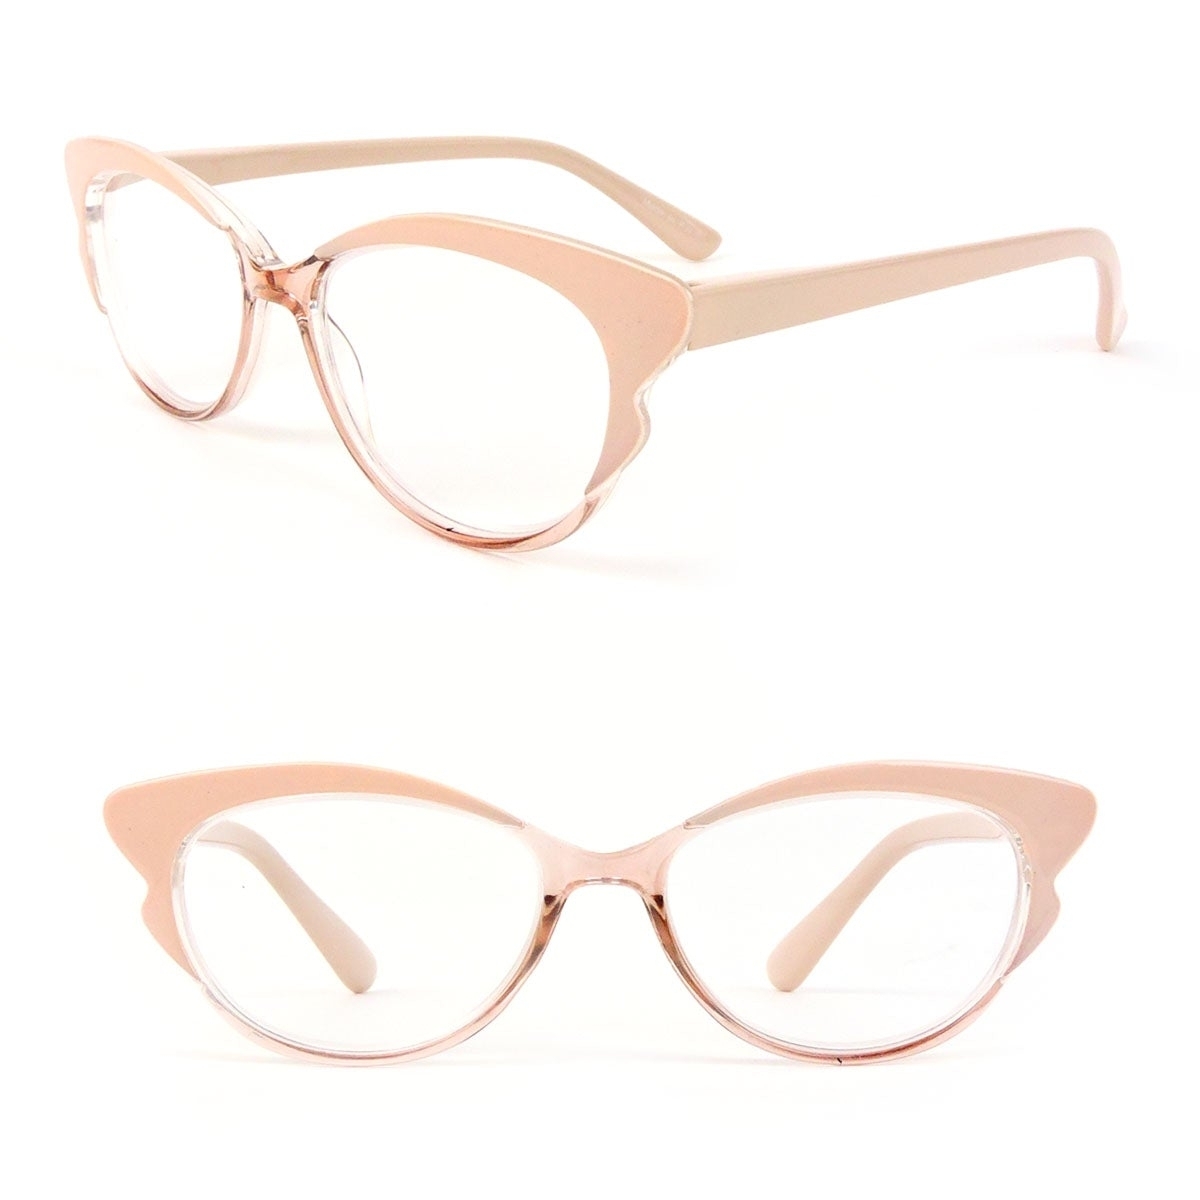 Cat Eye Frame Spring Hinges Fashion Women's Reading Glasses - Beige, +2.50